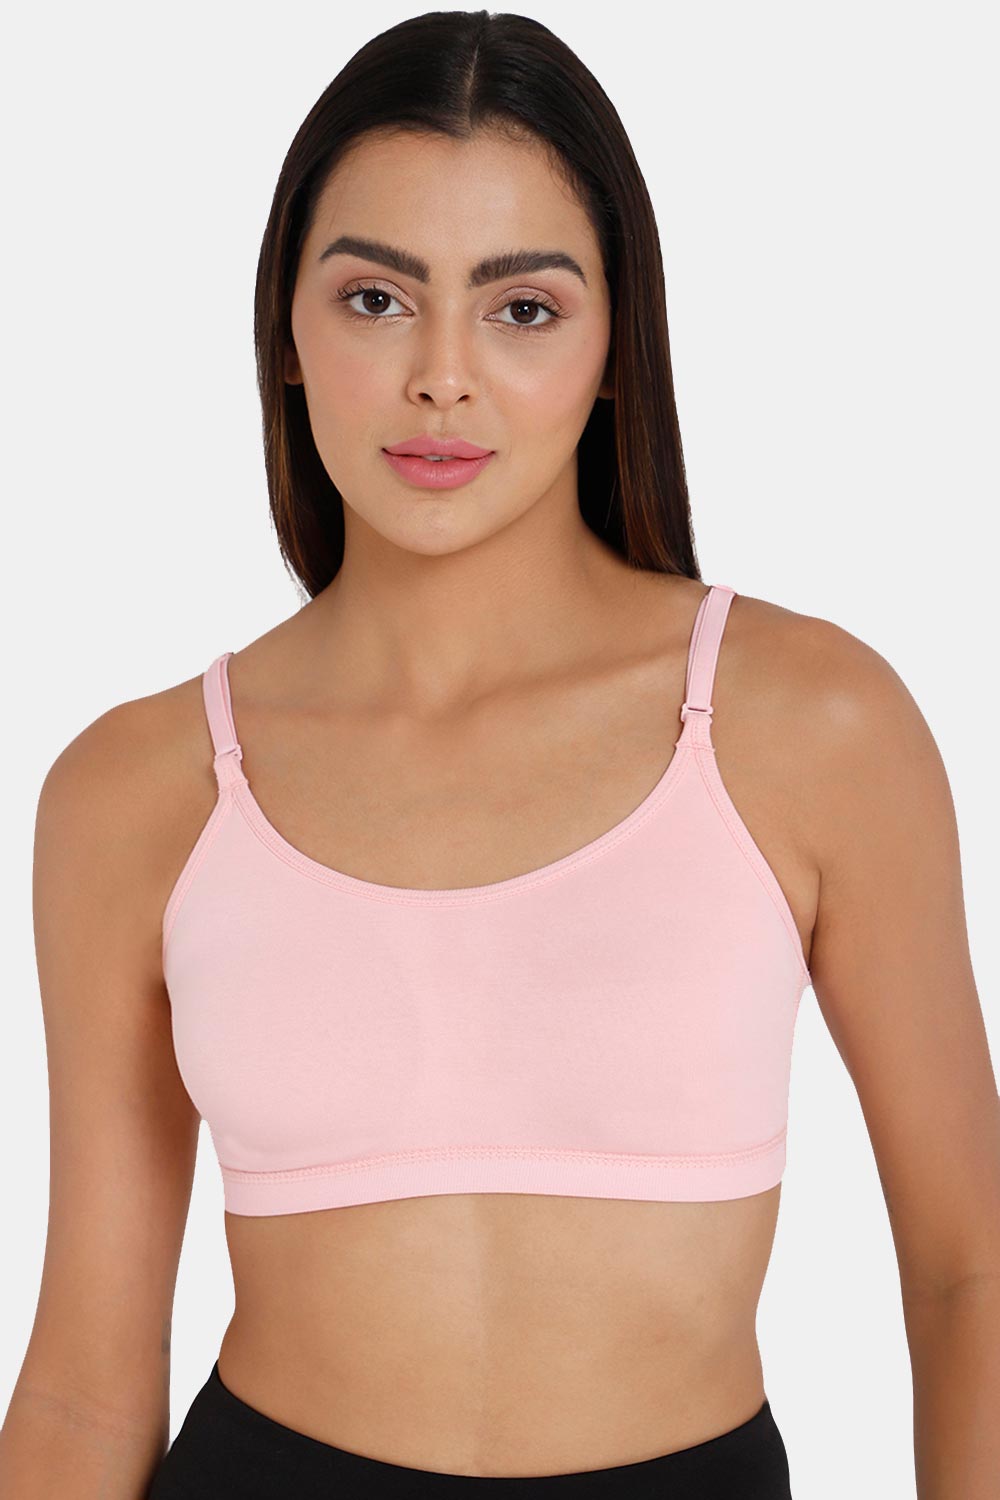 Lycra Cotton Non-Padded Ladies Plain Sports Bra, Light Pink at Rs